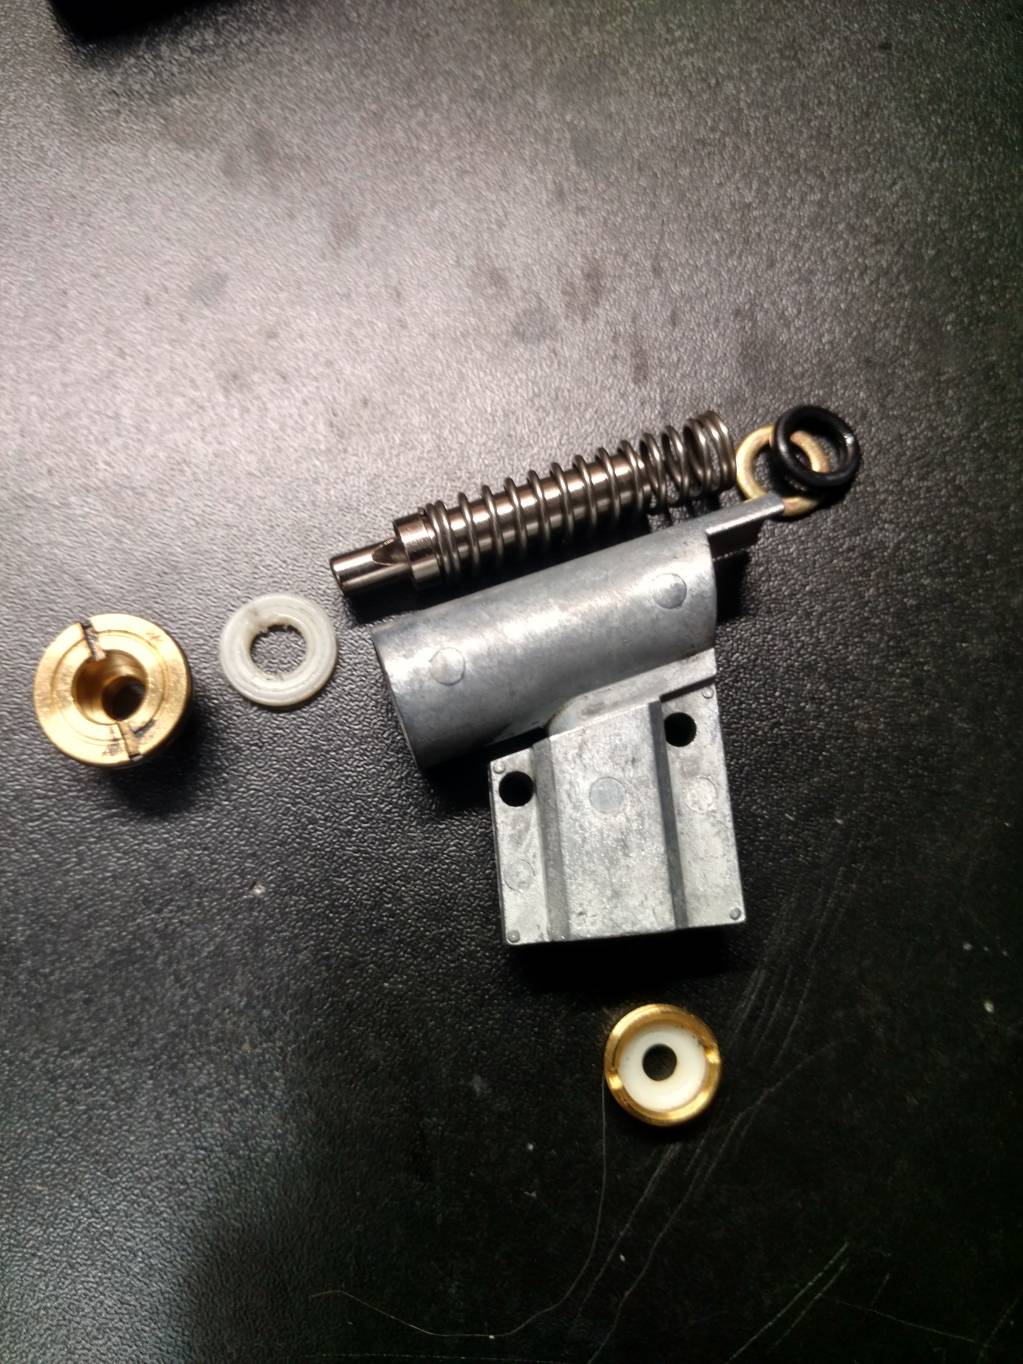 P226 valve mod damage.1631647099.jpg